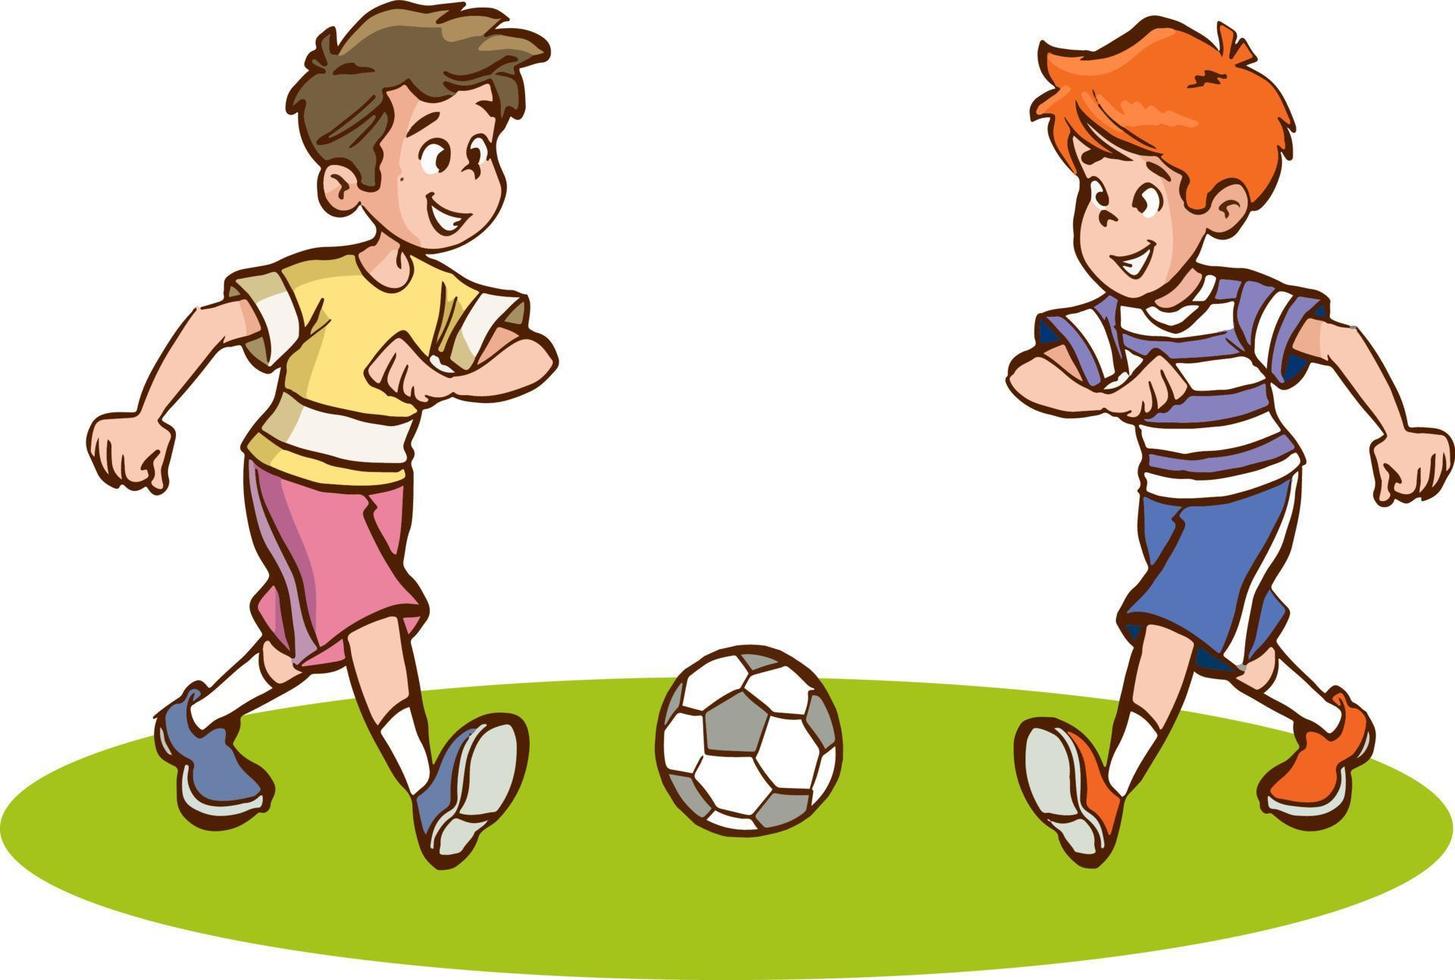 kids playing soccer cartoon vector